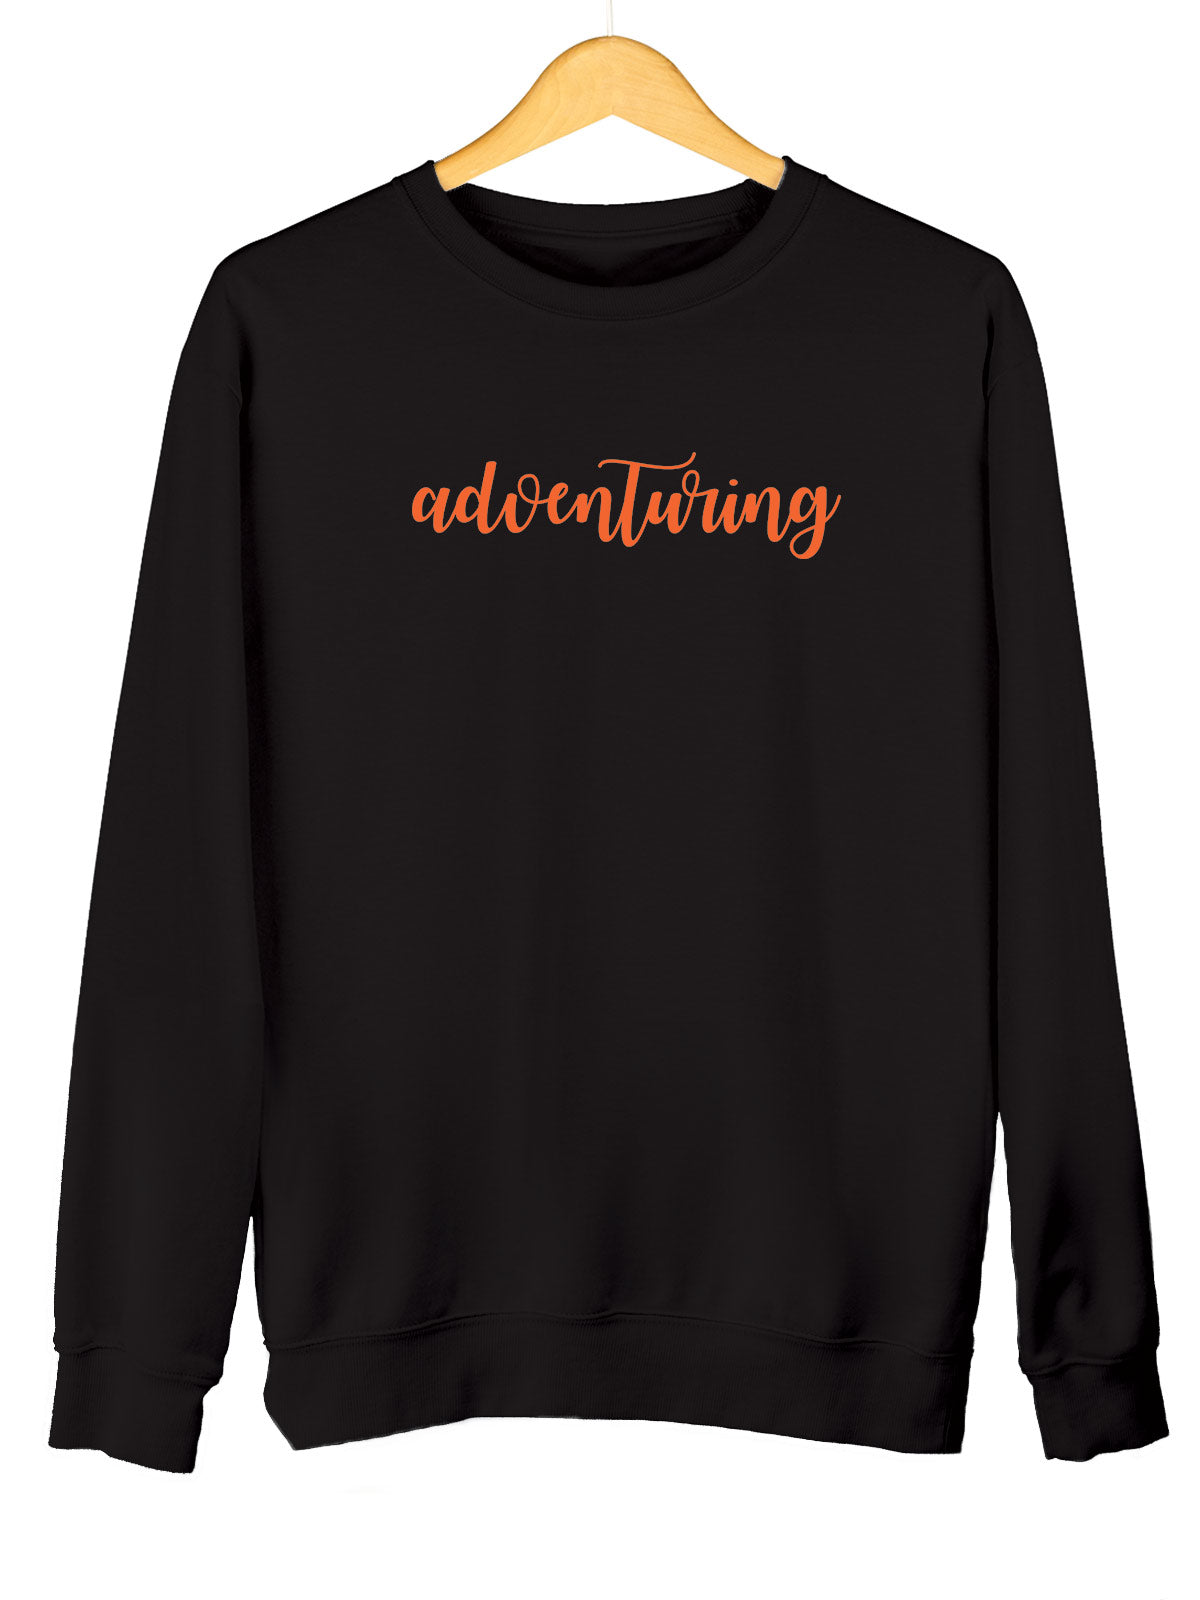 Adventuring | Printed Unisex Sweatshirt